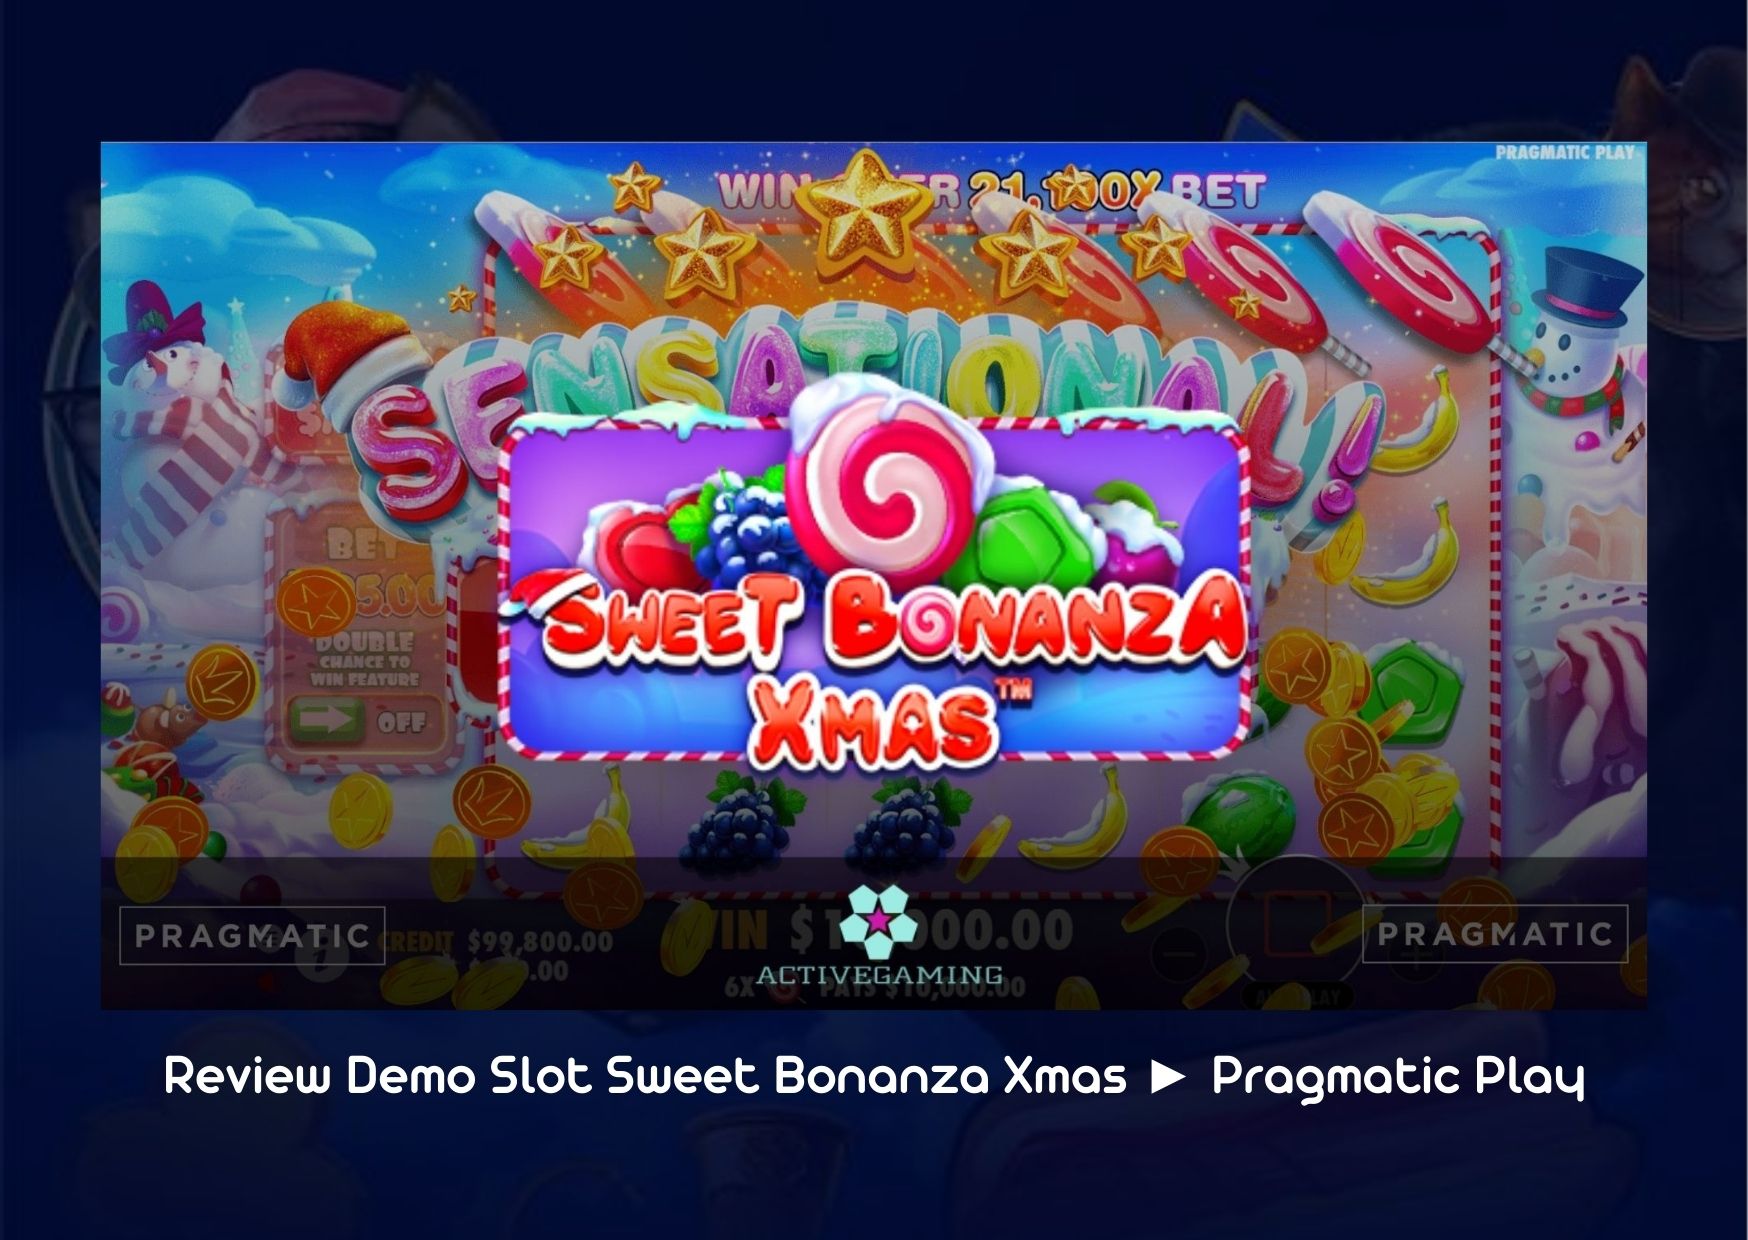 Review Demo Slot Sweet Bonanza Xmas ► Pragmatic Play